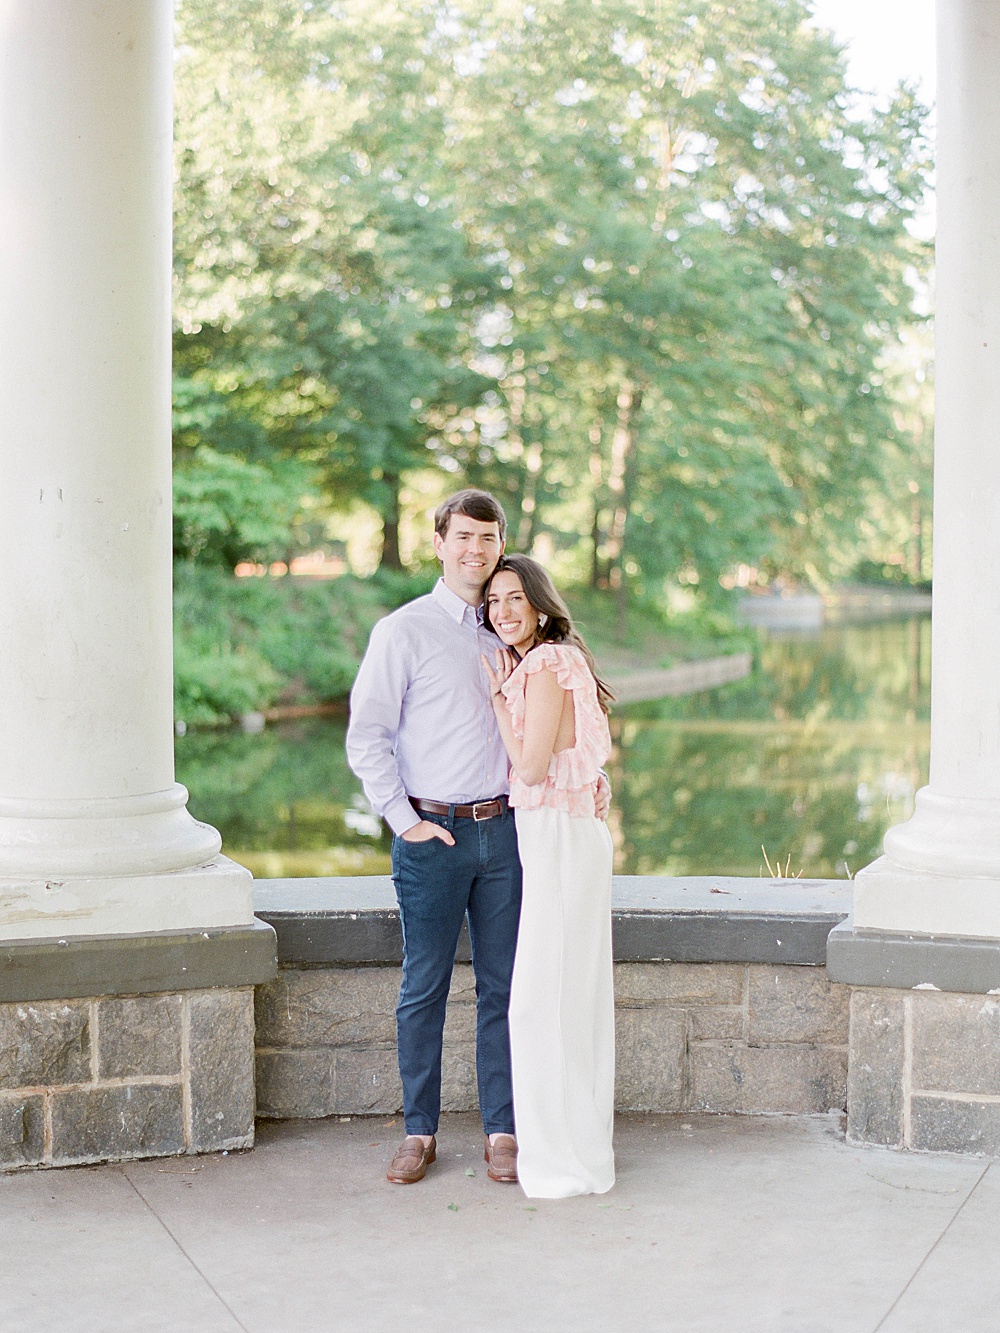 Engagement photos inside Piedmont Park gazebo